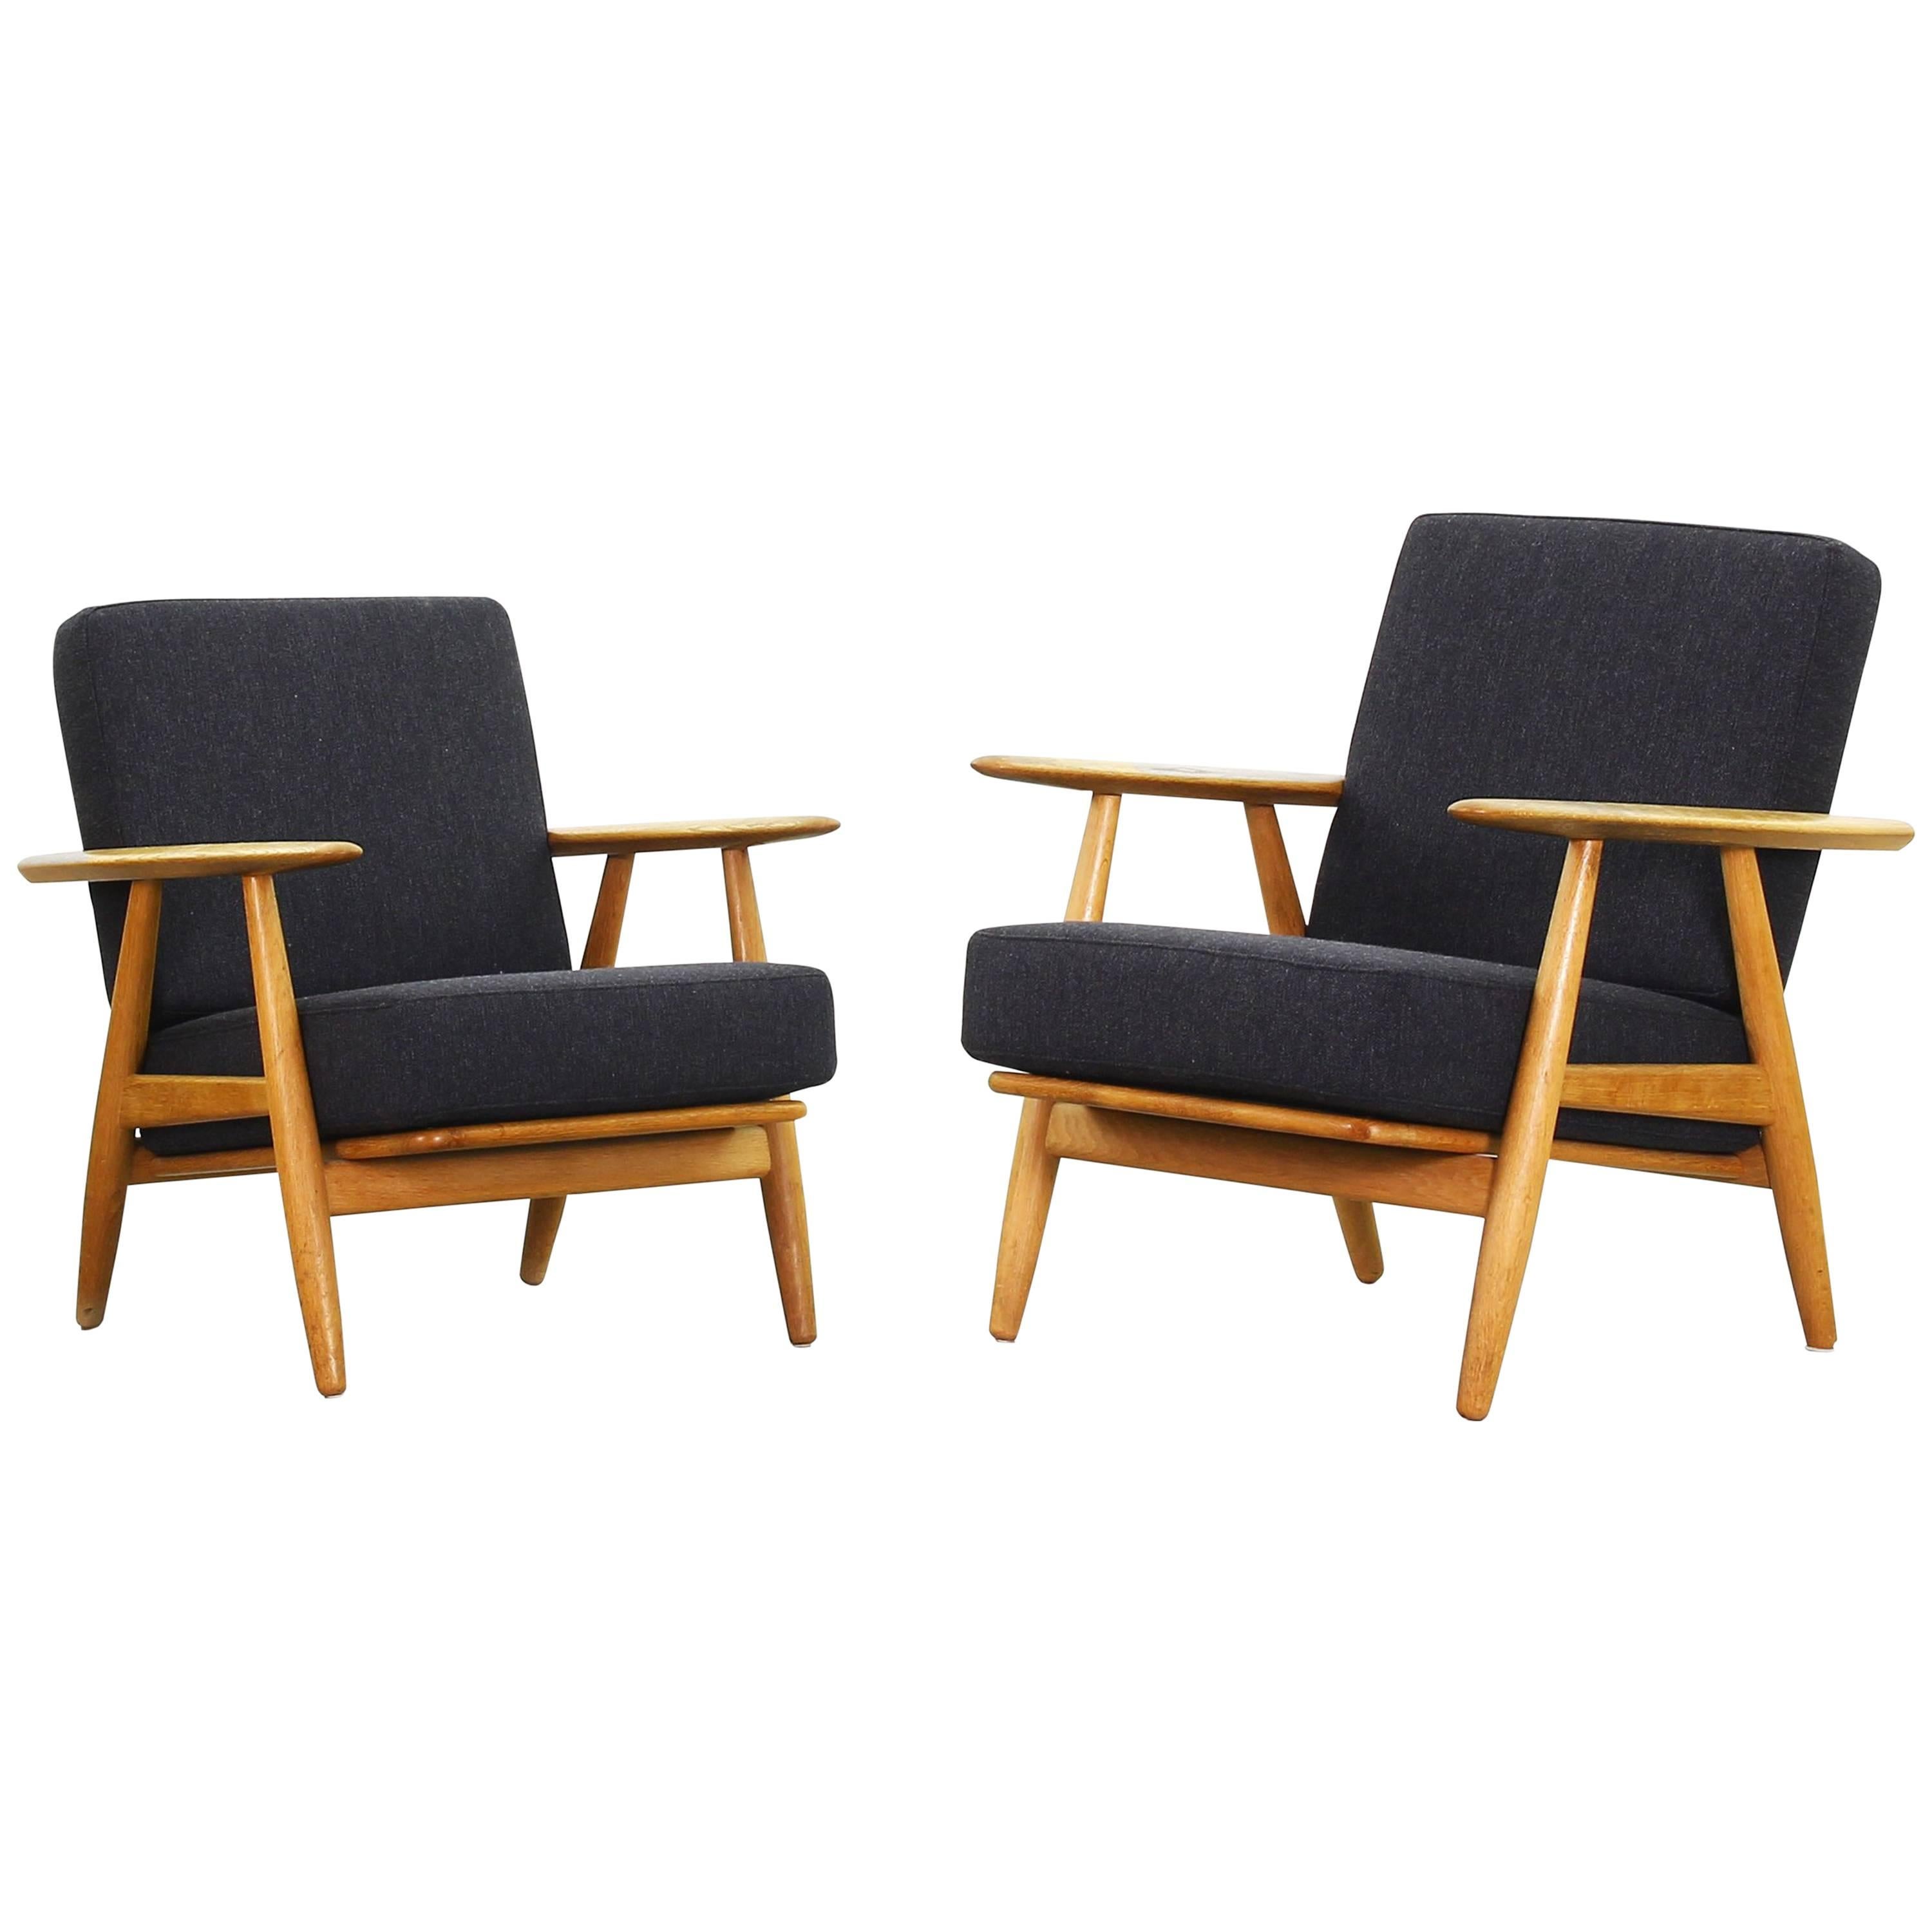 Beautiful Pair of Lounge Chairs by Hans J. Wegner for GETAMA Cigar Model 240